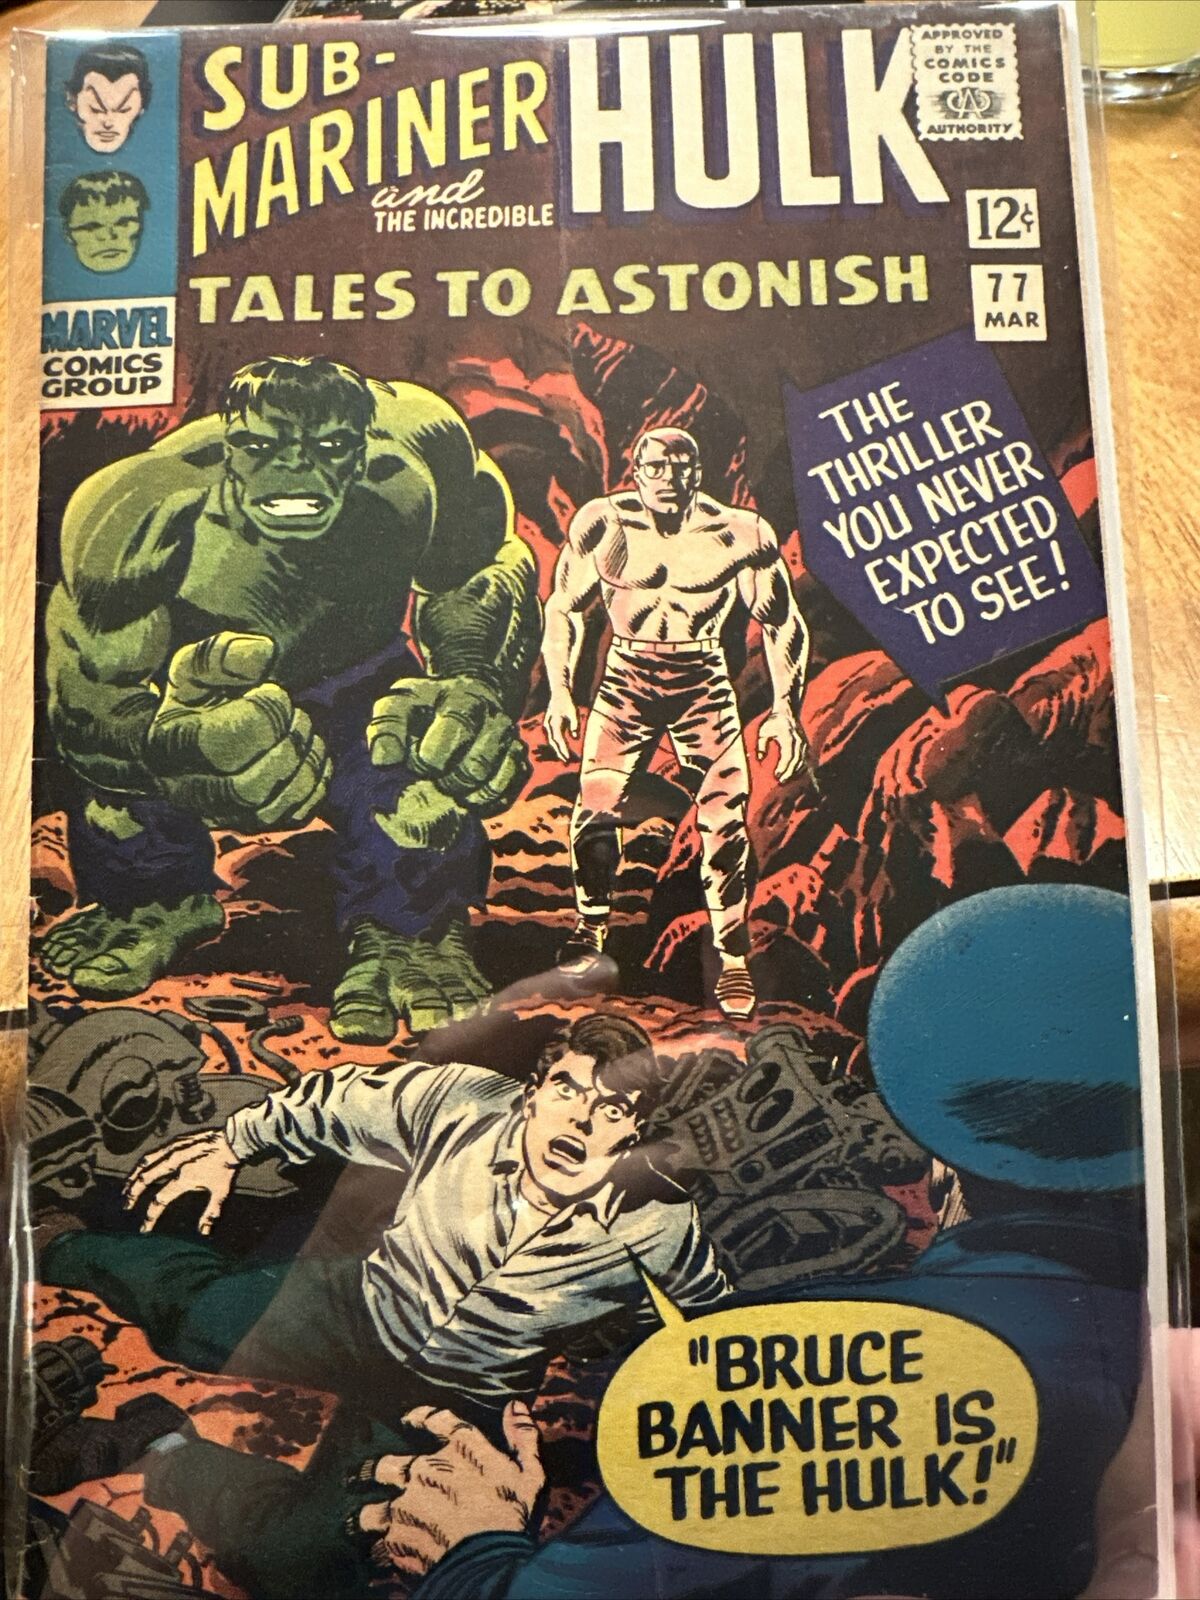 Marvel Comics TALES TO ASTONISH SUB-MARINER & HULK #77 Mar. 1966 Book